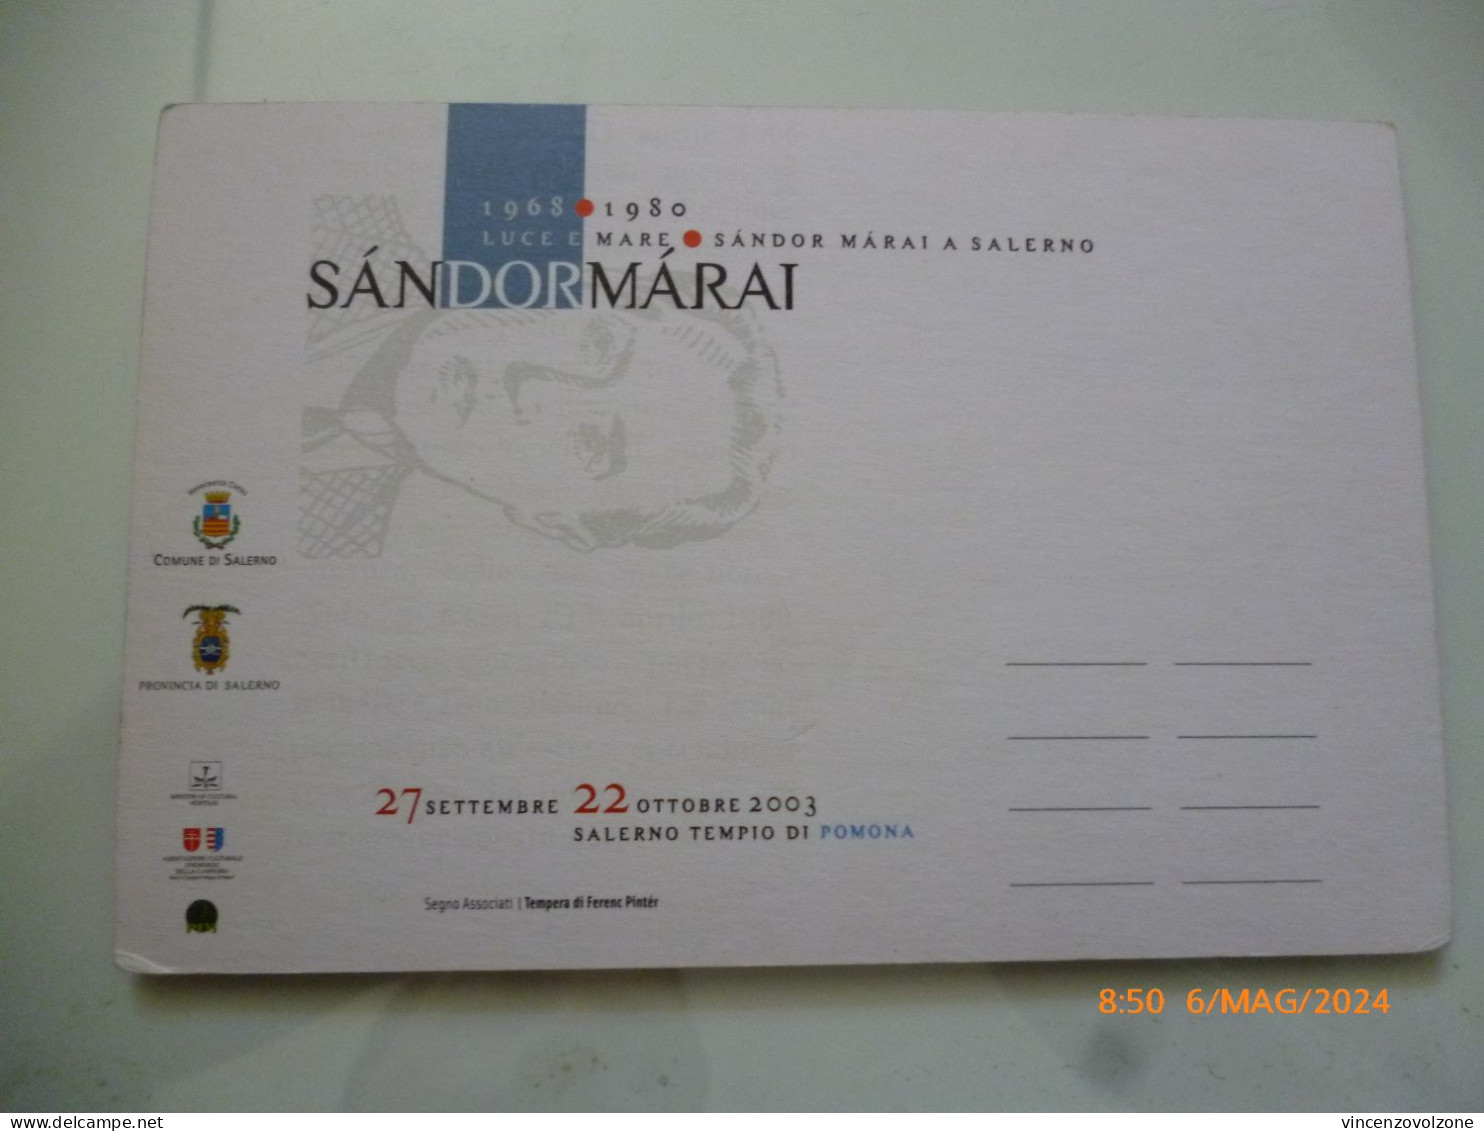 Cartolina "1968 - 1980 SANDORMARAI A SALERNO 2003" - Expositions